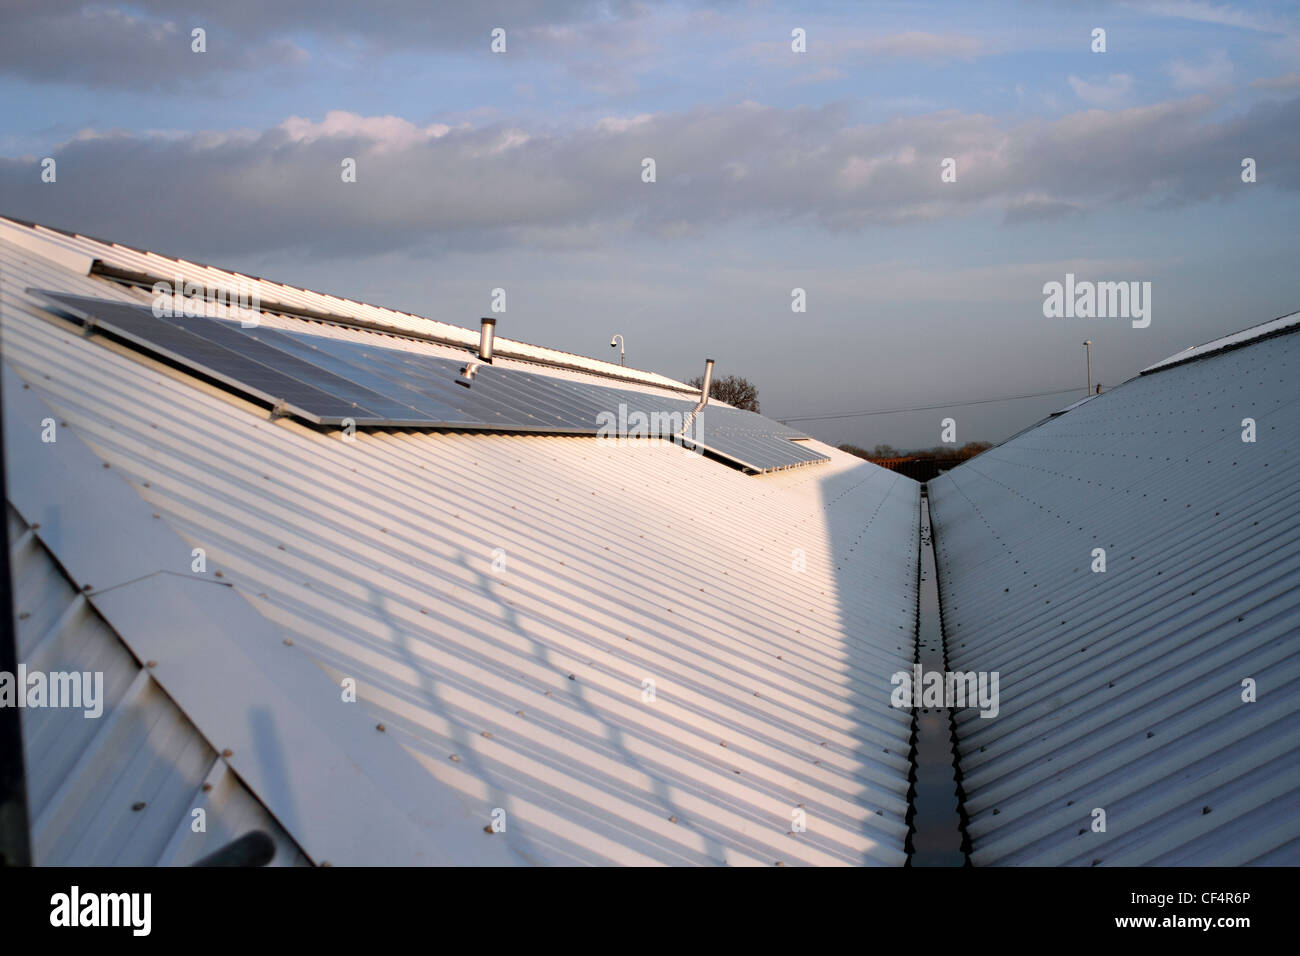 40 solar panels on a garden Centre roof - providing 10 kilowatts of energy Stock Photo